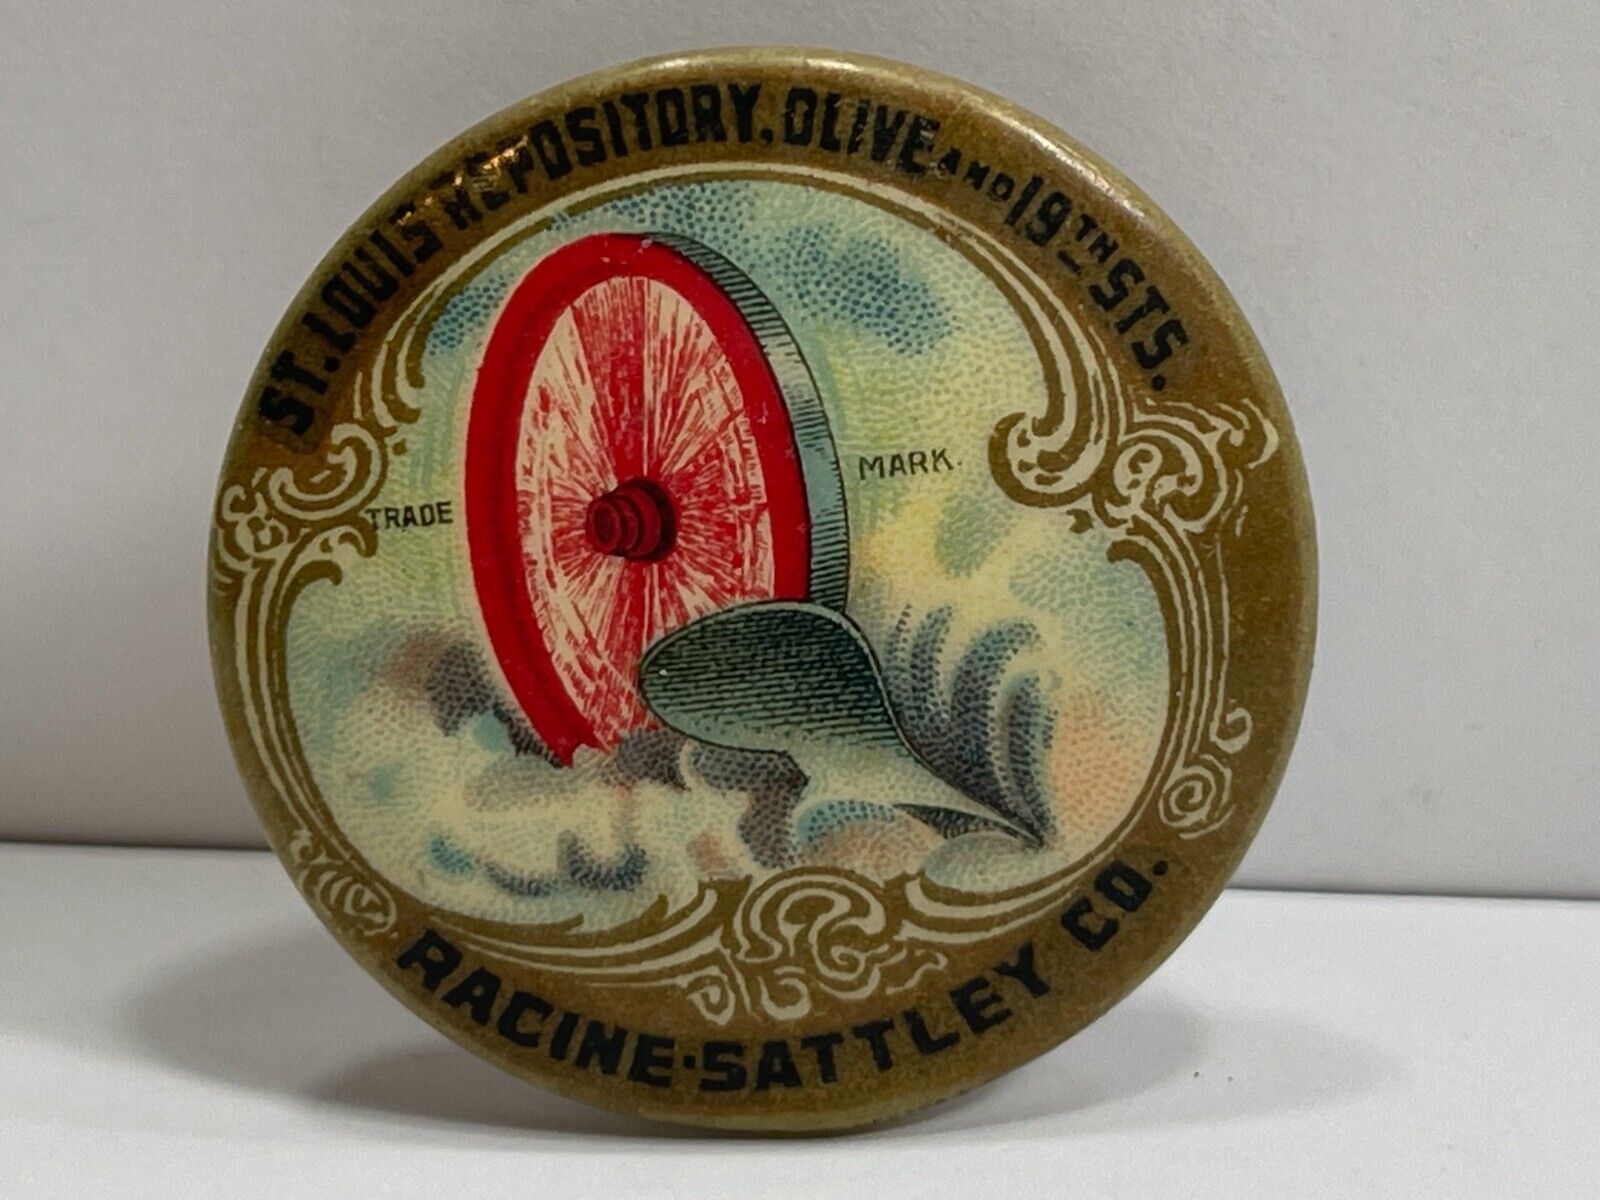 Antique 1904 Racine Sattley Co. - St. Louis, Missouri Pin (Horse Drawn Plows)